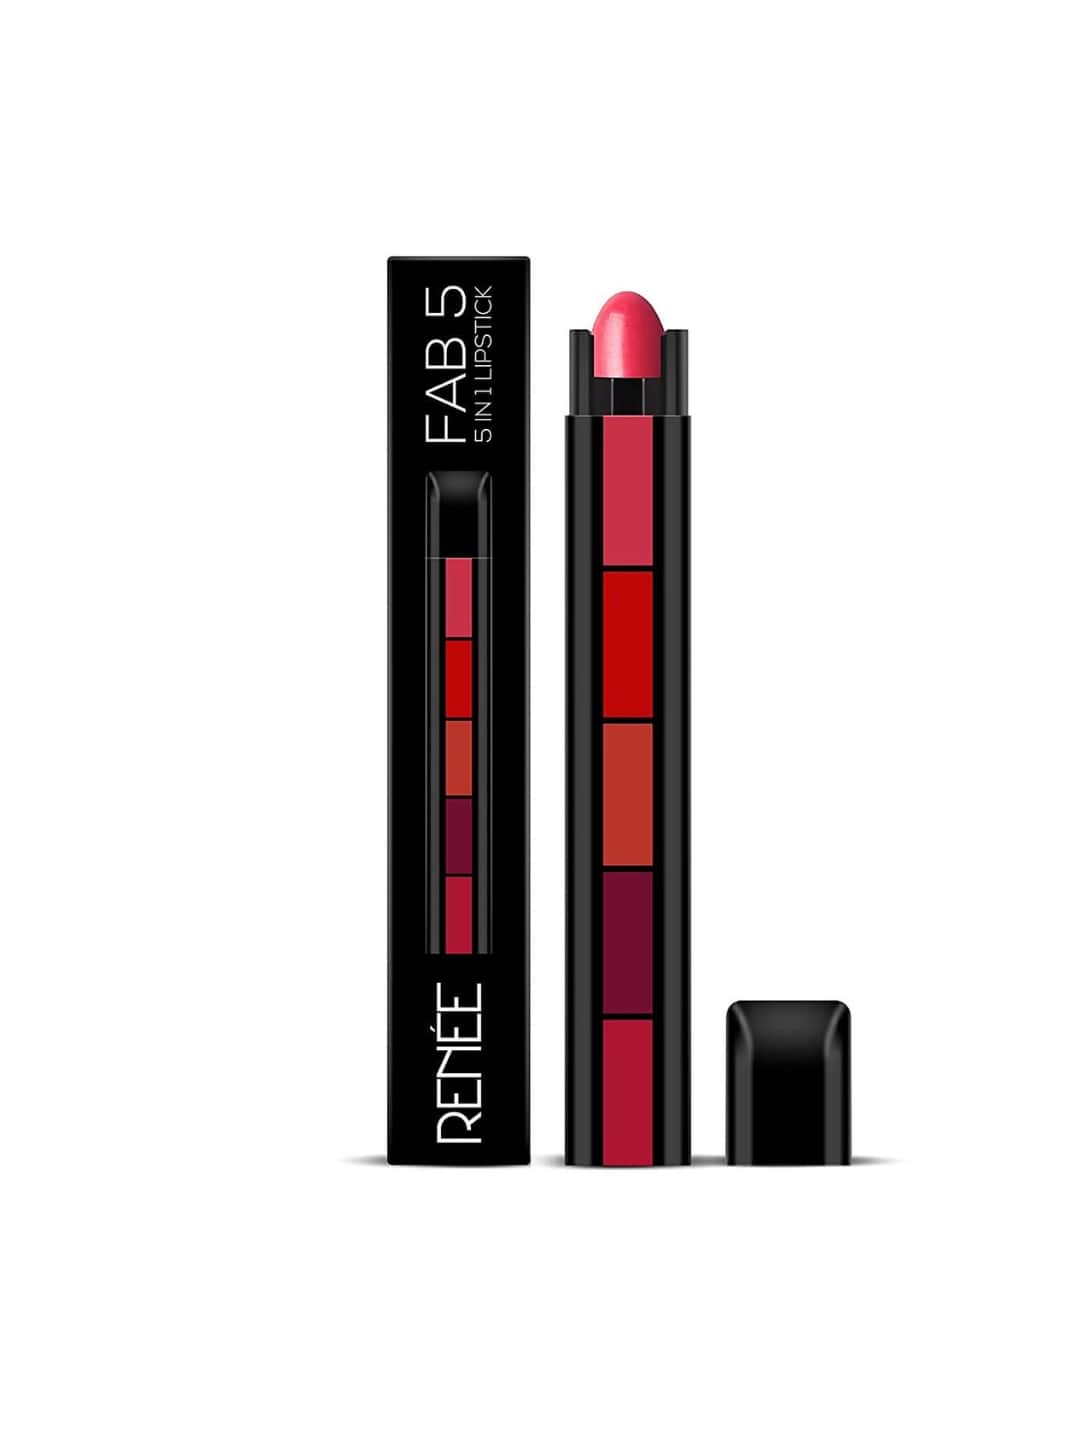 RENEE Fab 5 5in1 Lipstick 7.5 g Price in India